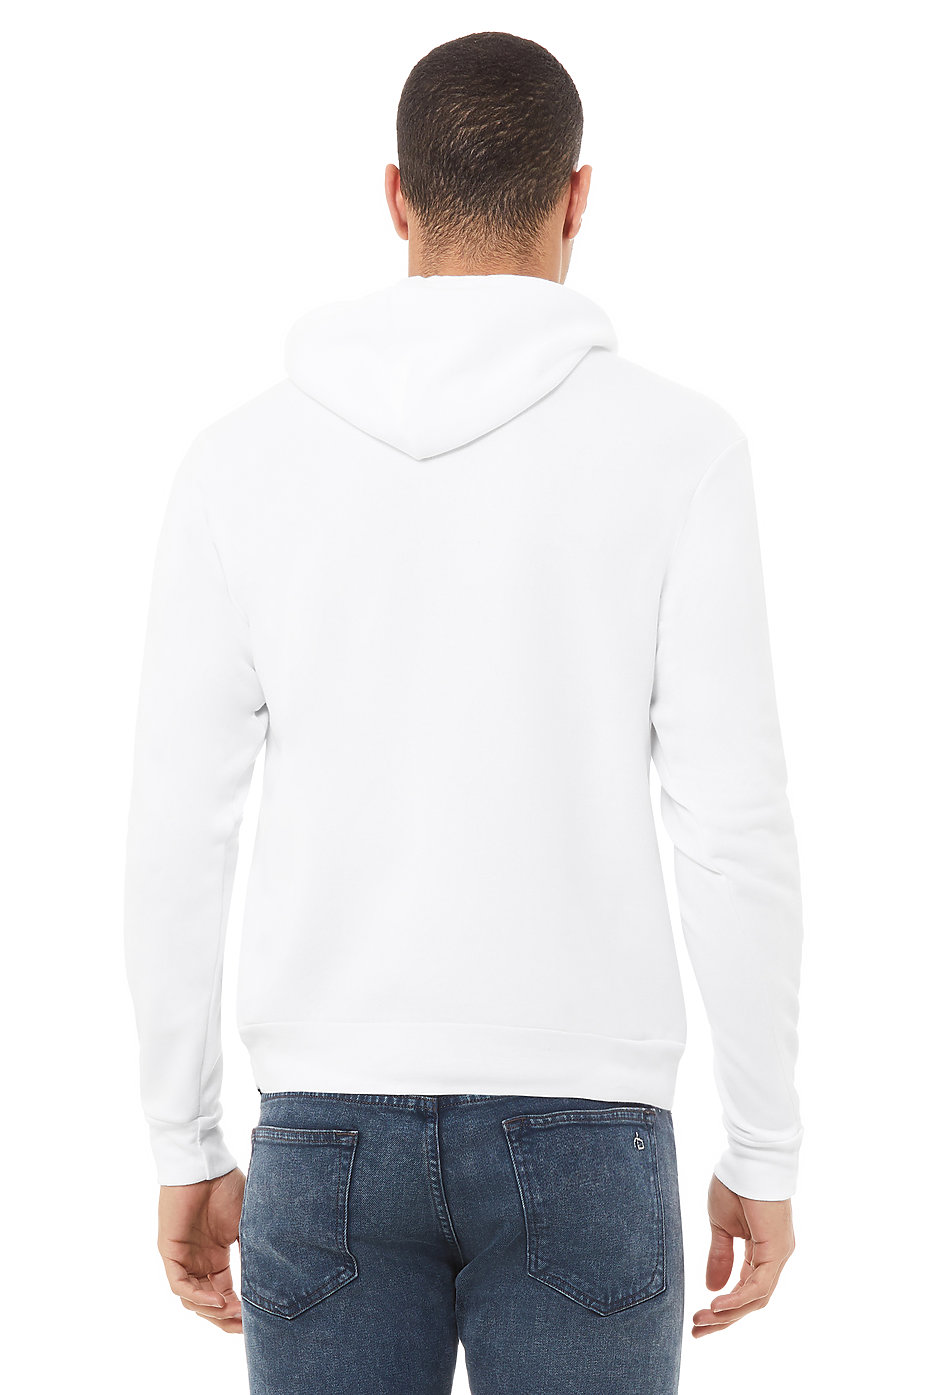 Kiabi jumper Navy Blue/White L discount 90% WOMEN FASHION Jumpers & Sweatshirts Print 